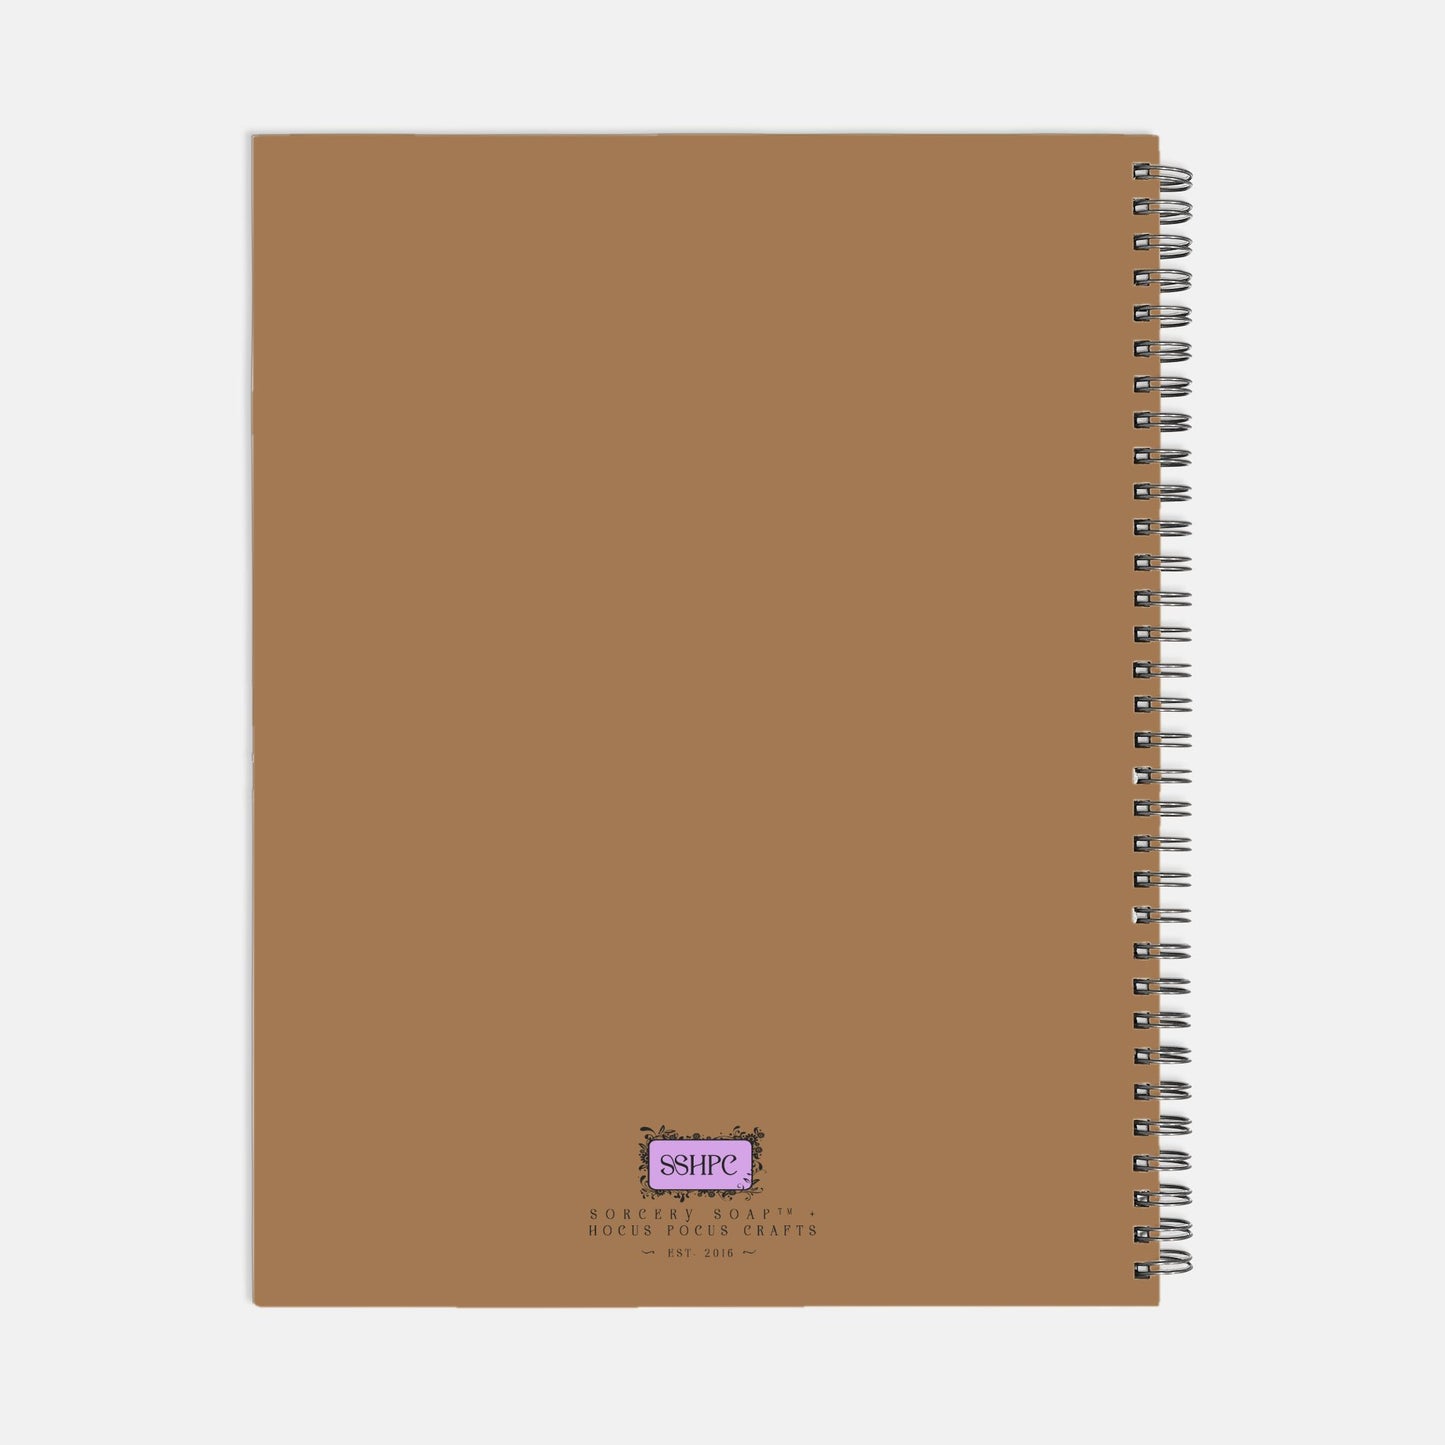 Frosty Dog Journal Notebook Hardcover Spiral 8.5 x 11